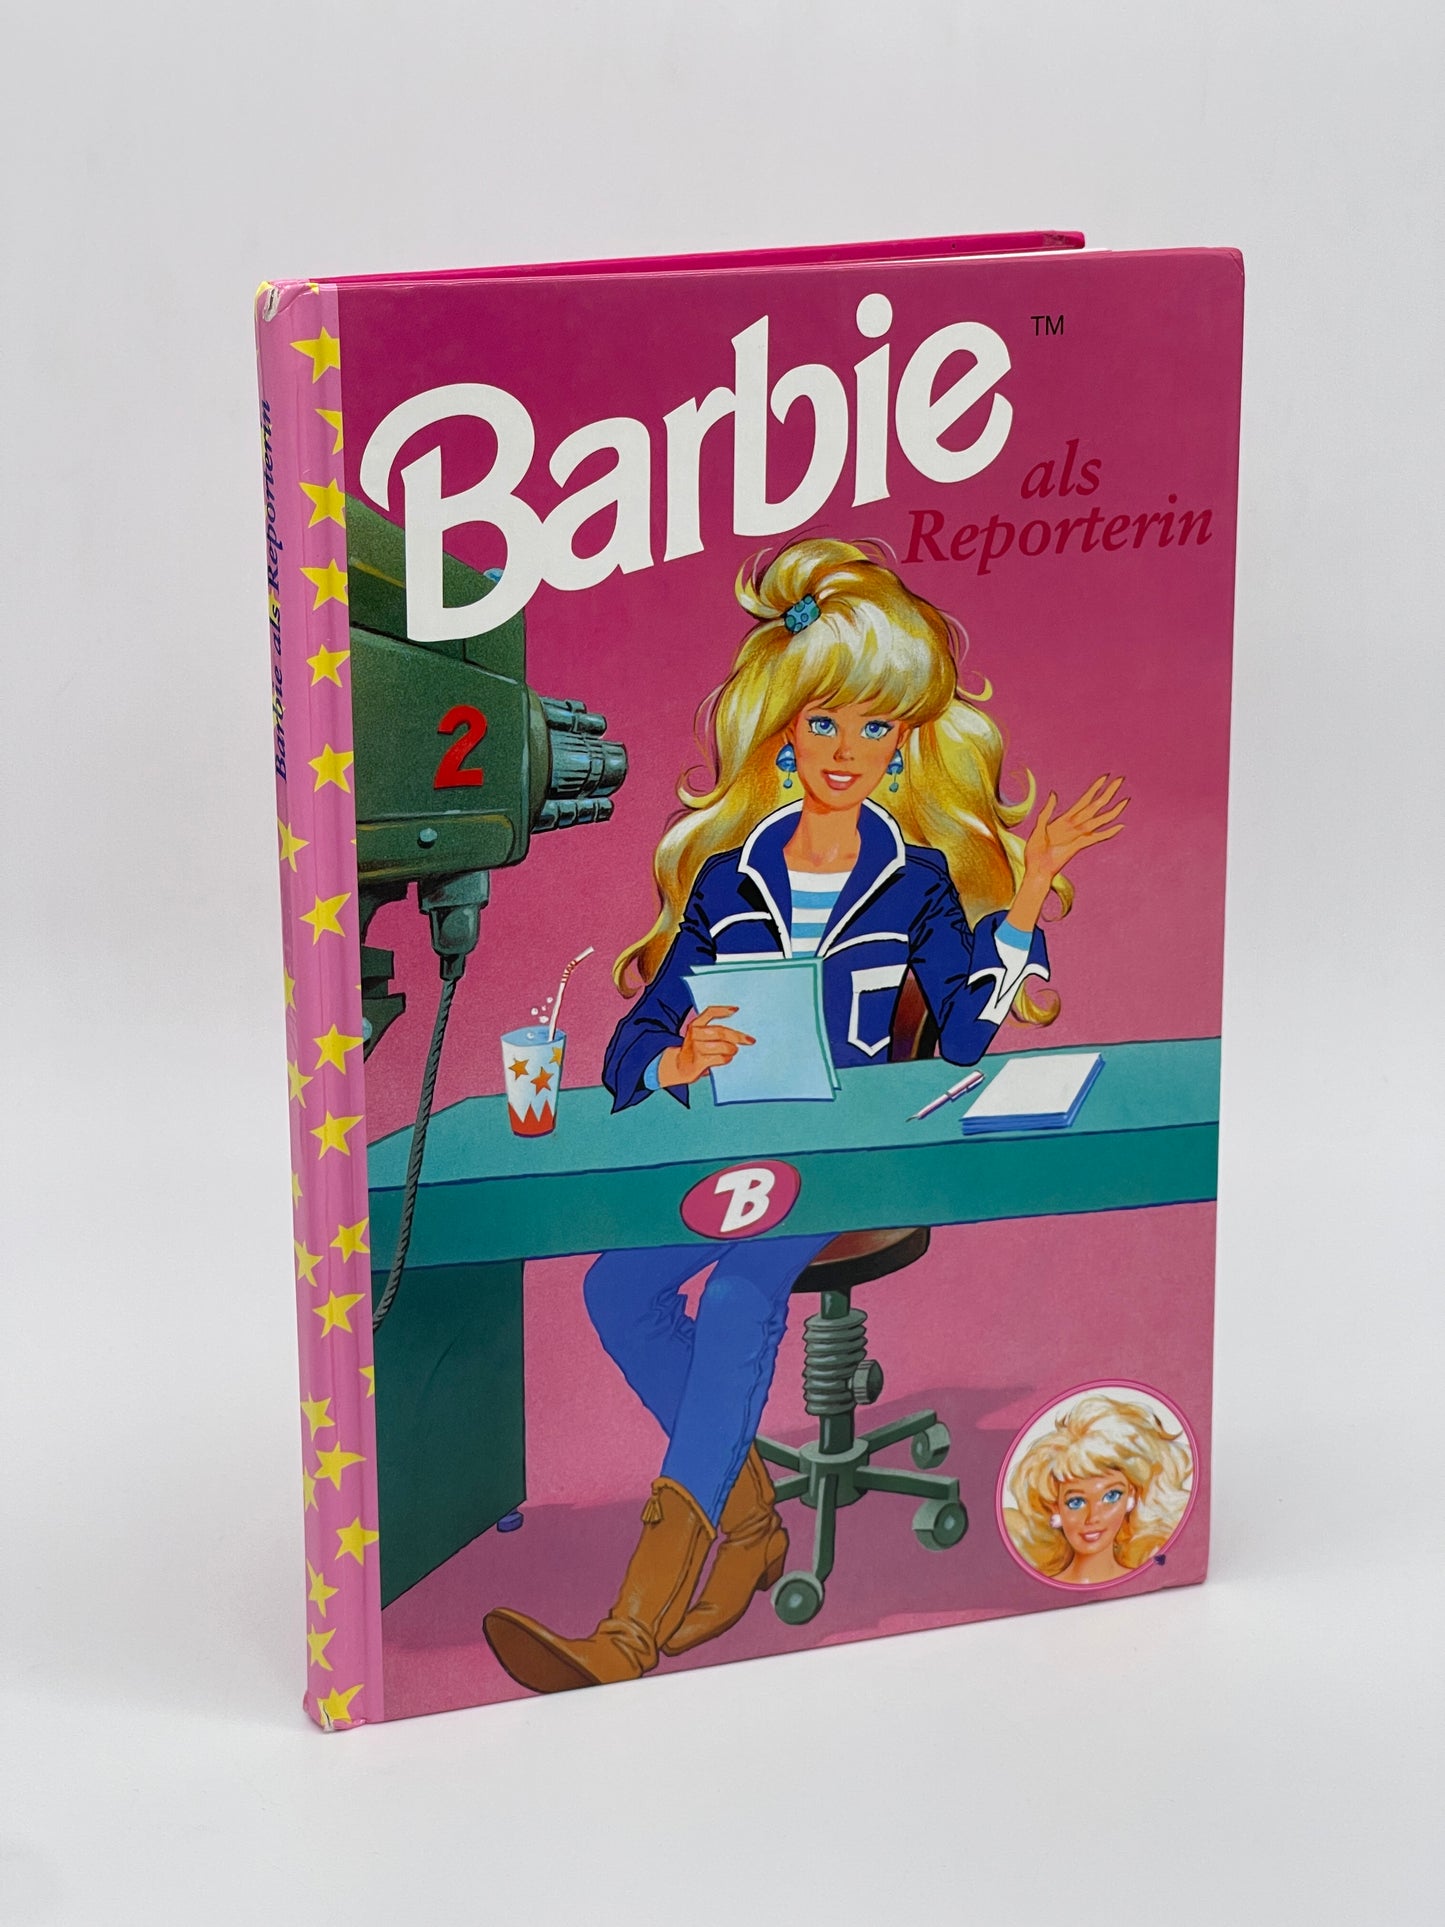 Barbie Kinderbuch "Barbie als Reporterin" Egmont Horizont Verlag (1996) #2